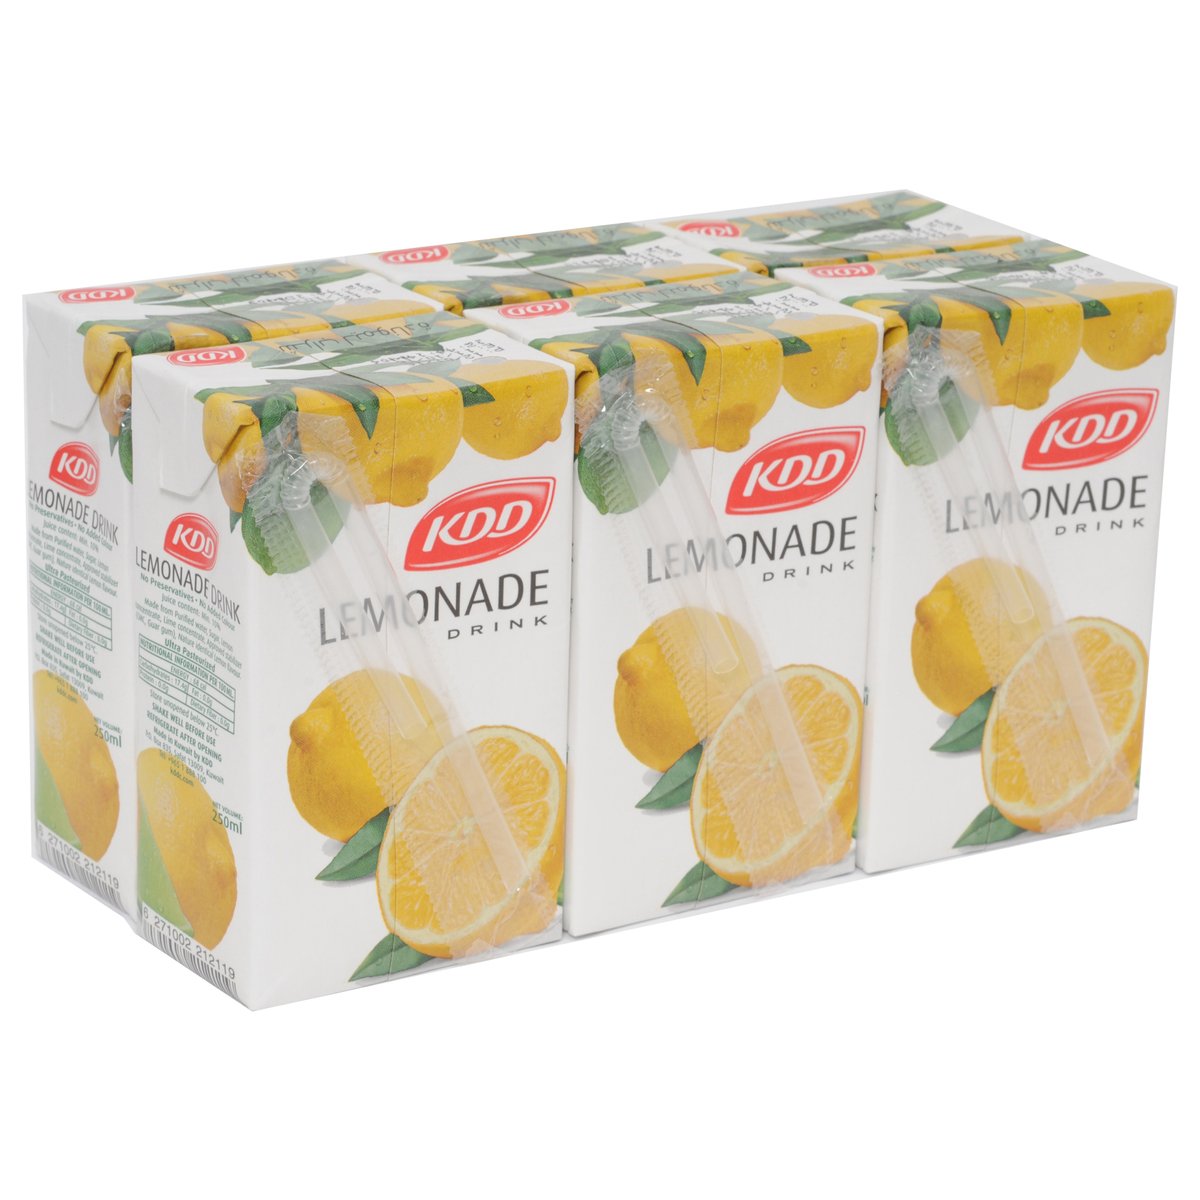 KDD Lemonade Drink 250ml x 6 Pieces